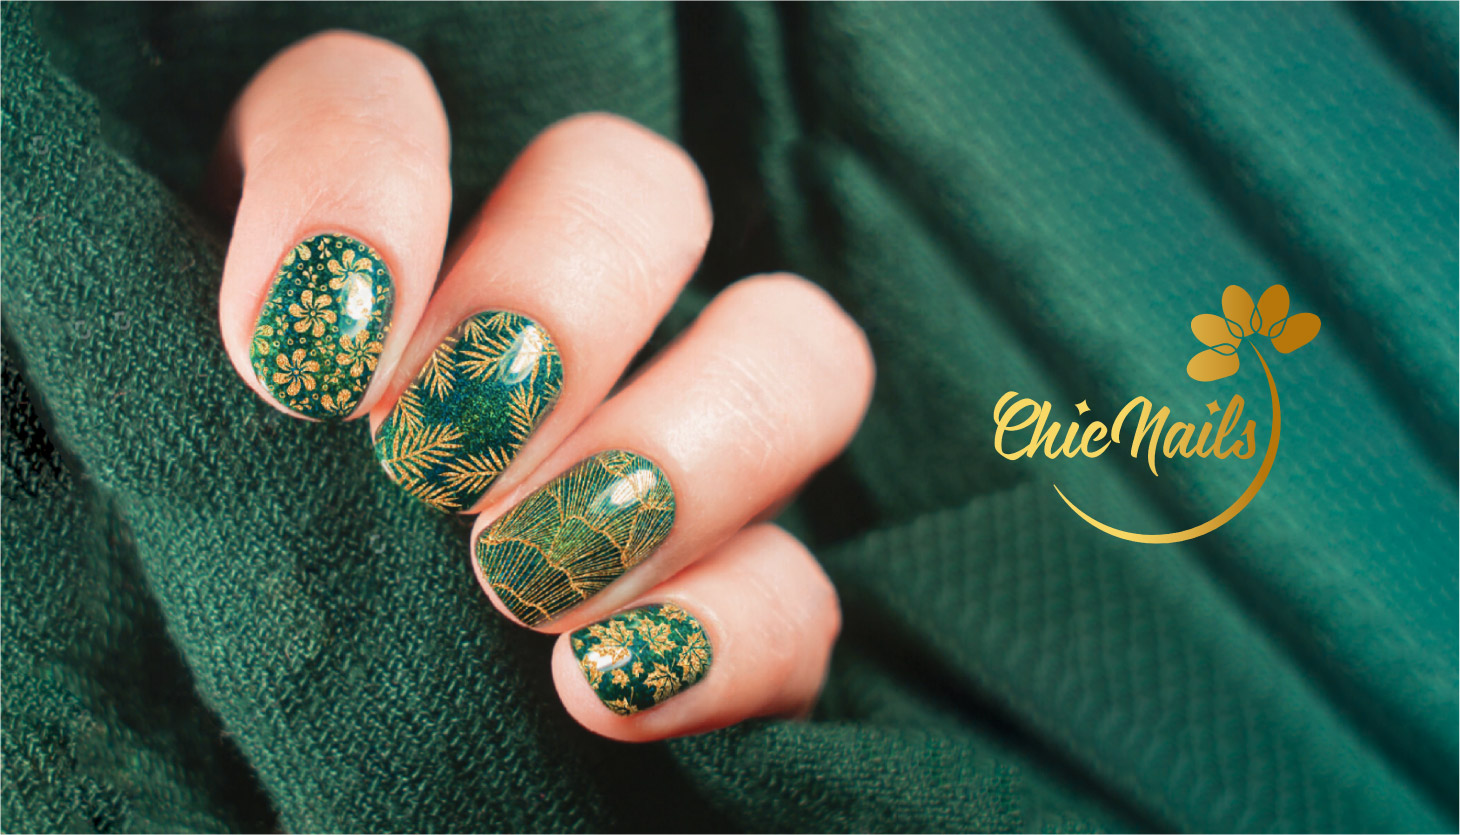 chic nails-06.jpg